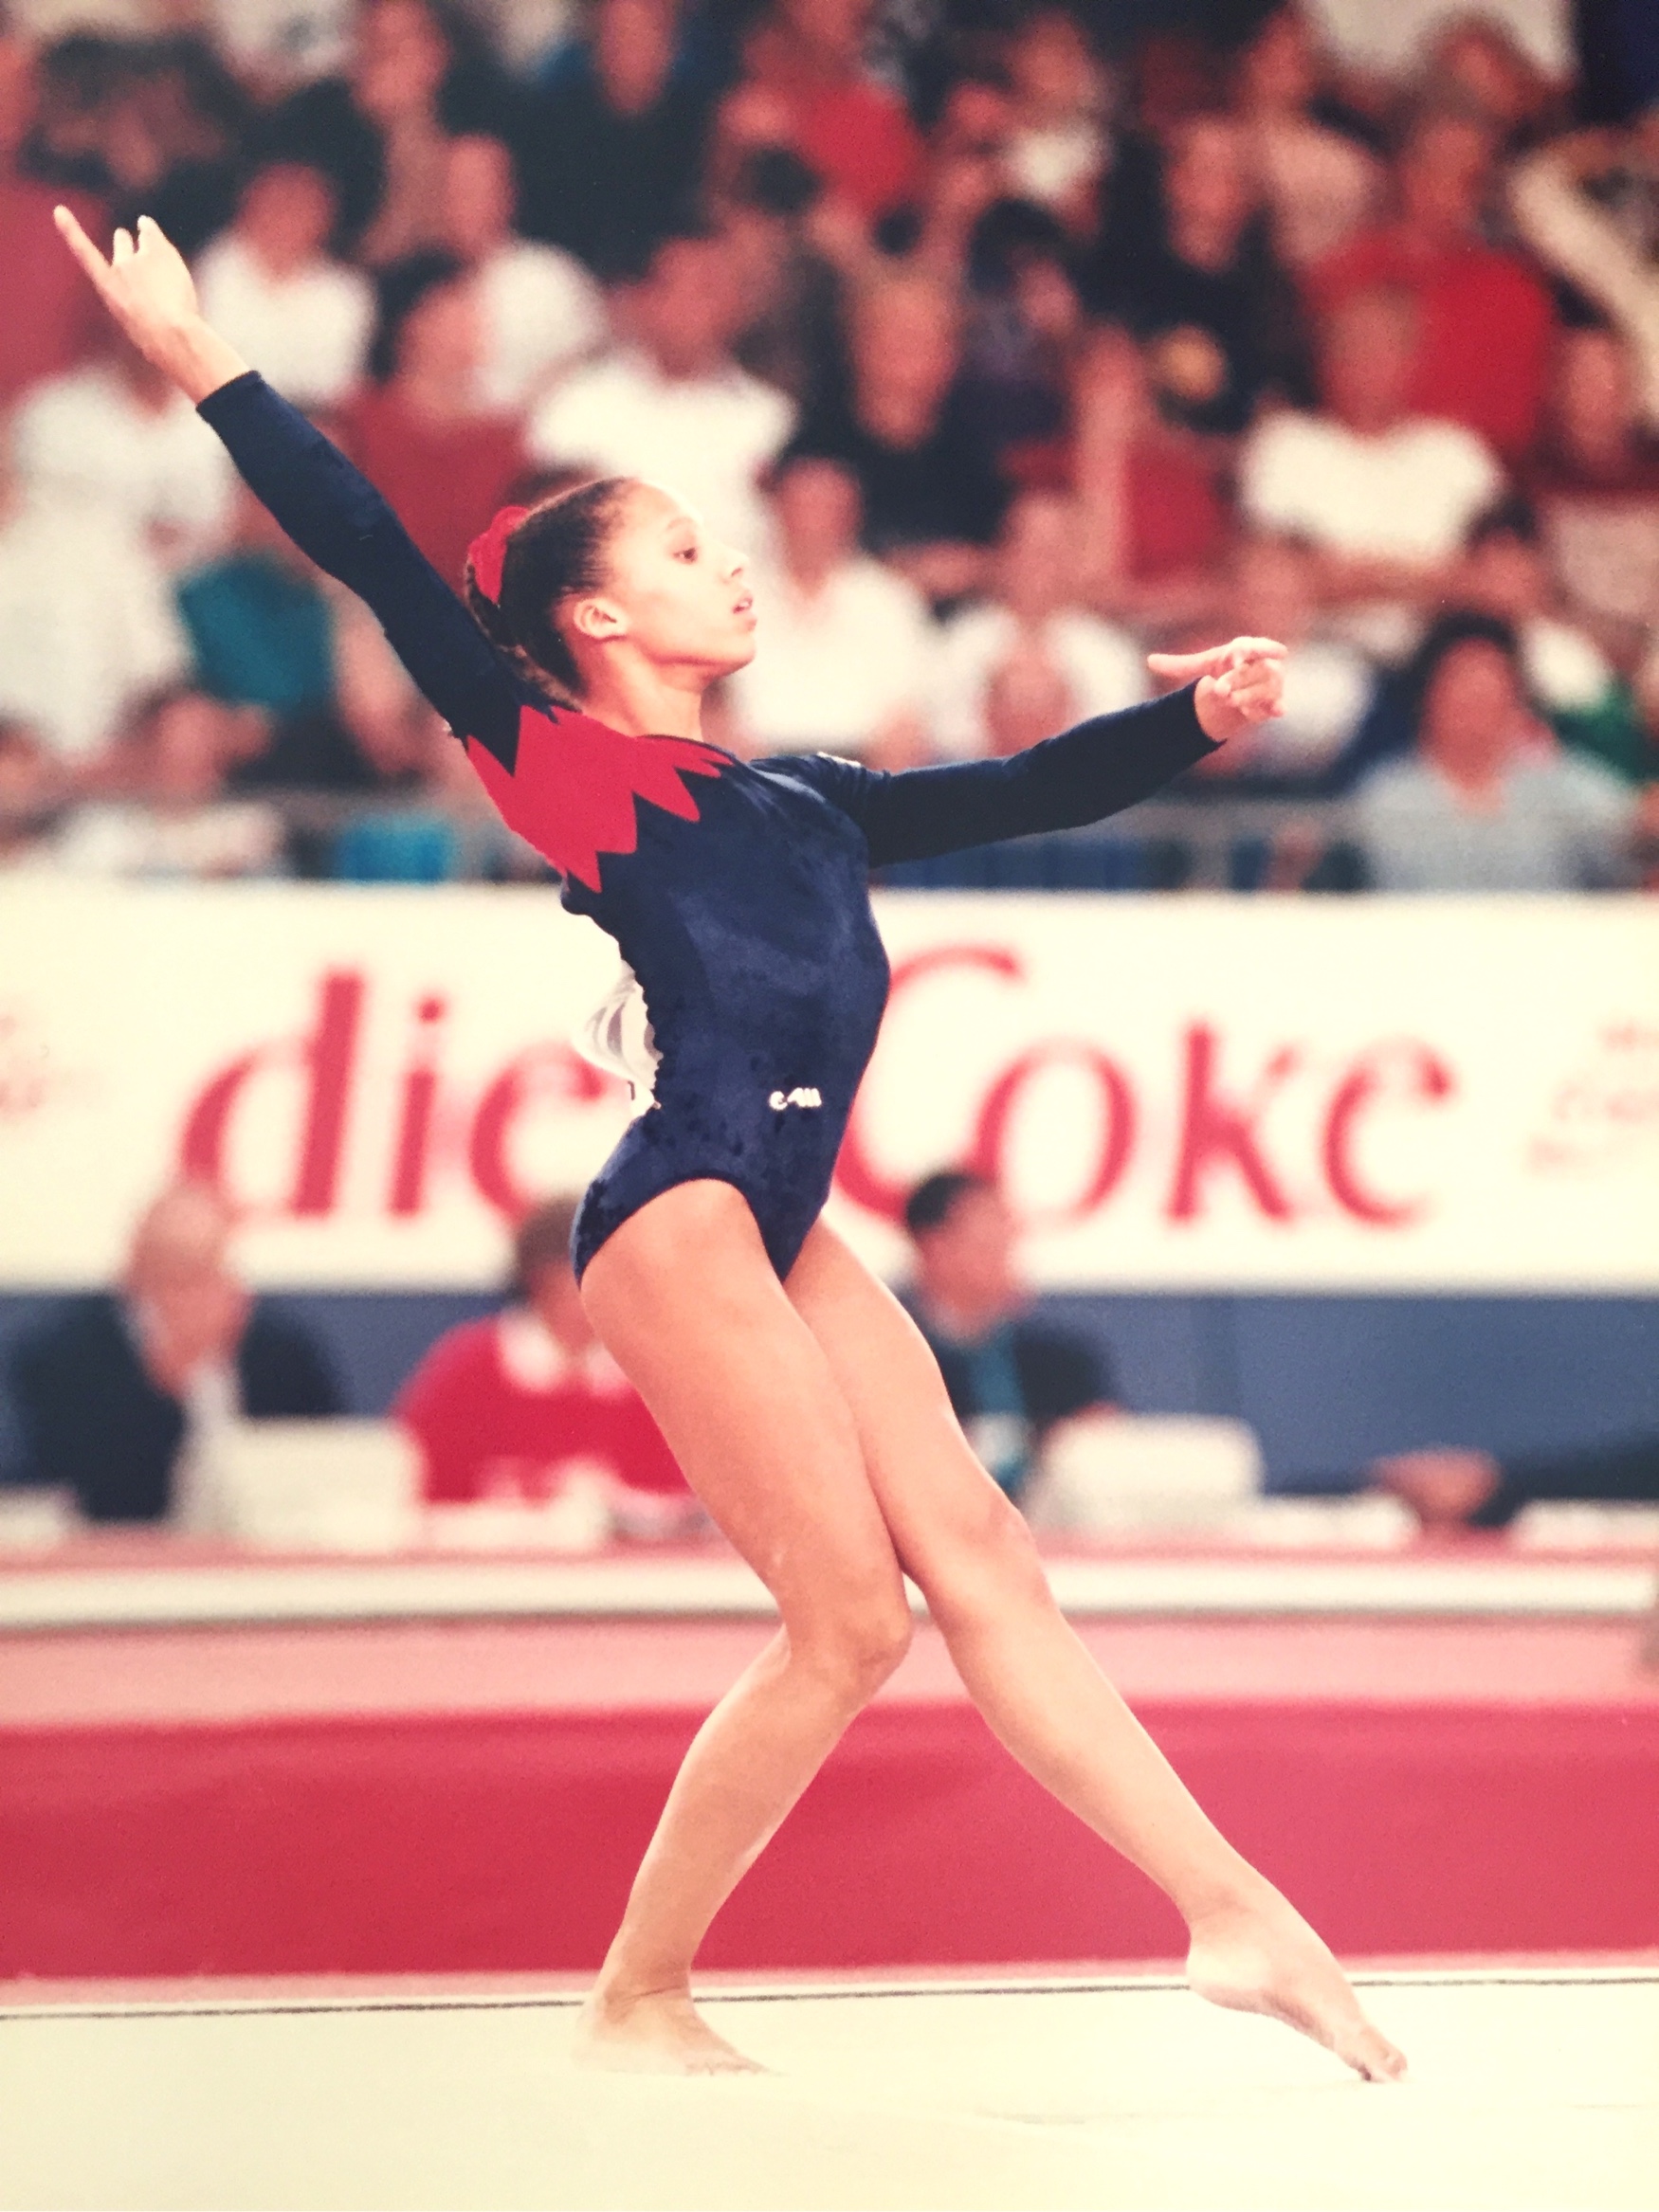 Zita Lusack gymnast competing on floor